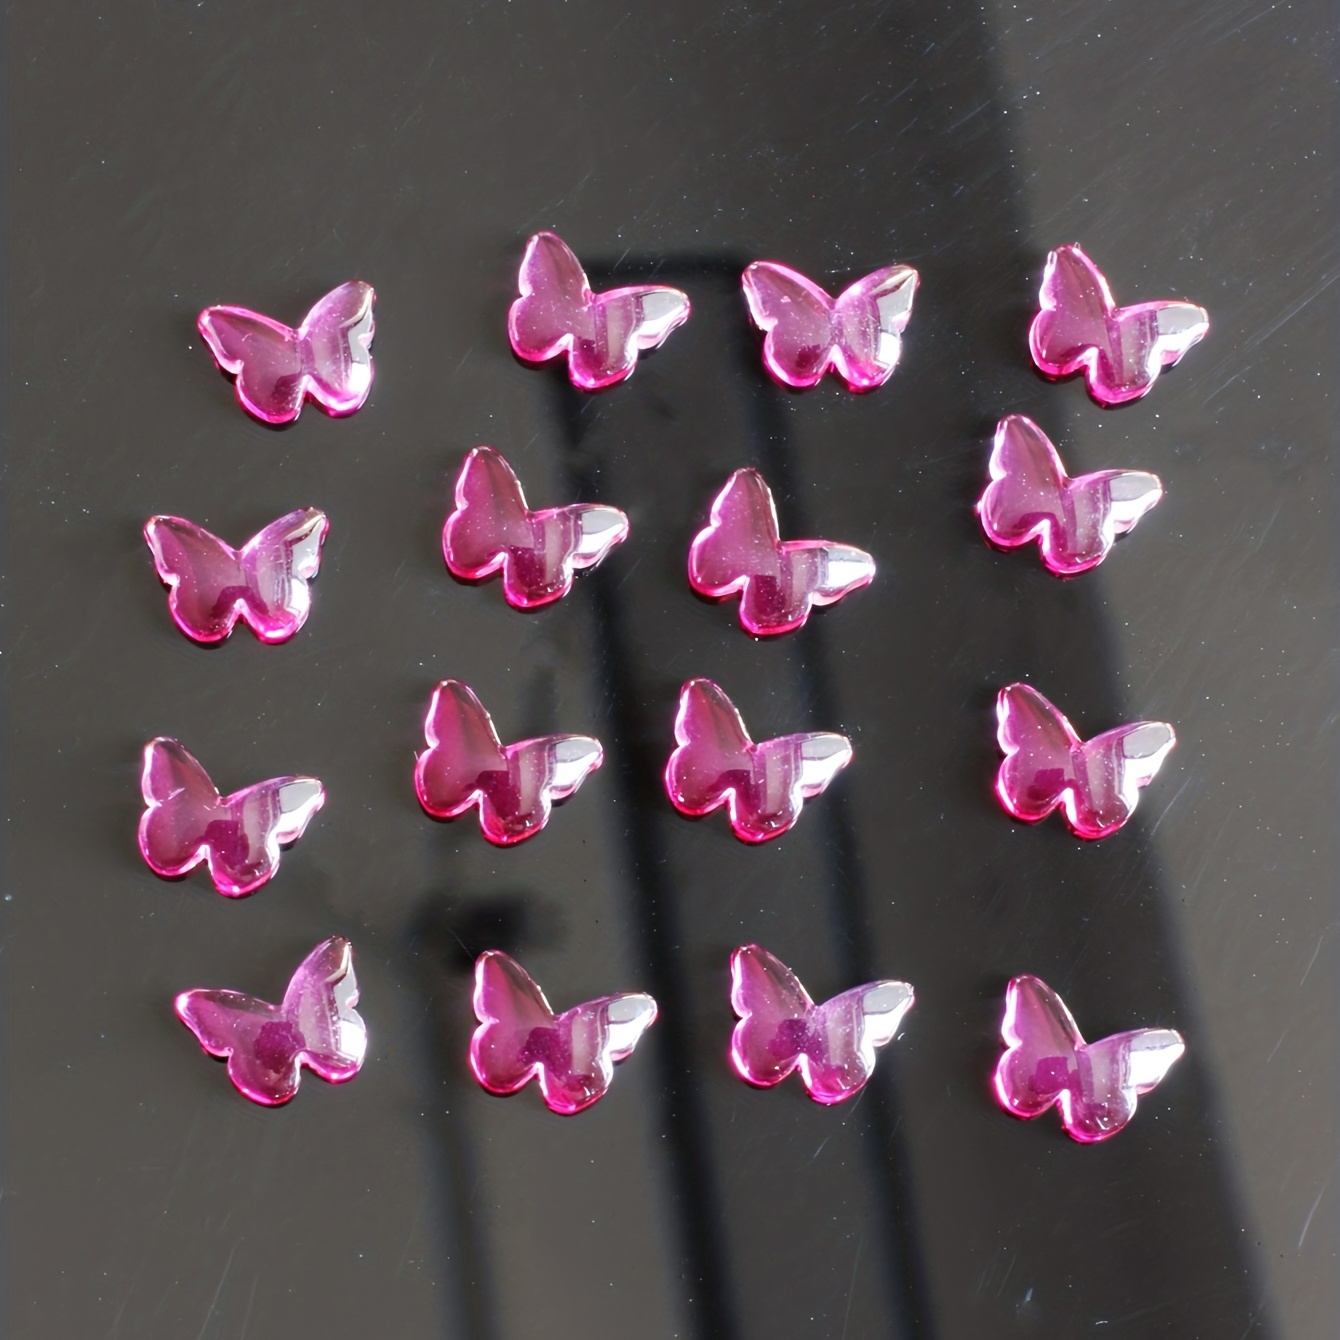 Grape Aurora Purple 3D Nail Charms - Resin Stones for Gel Polish Manicure  Decoration